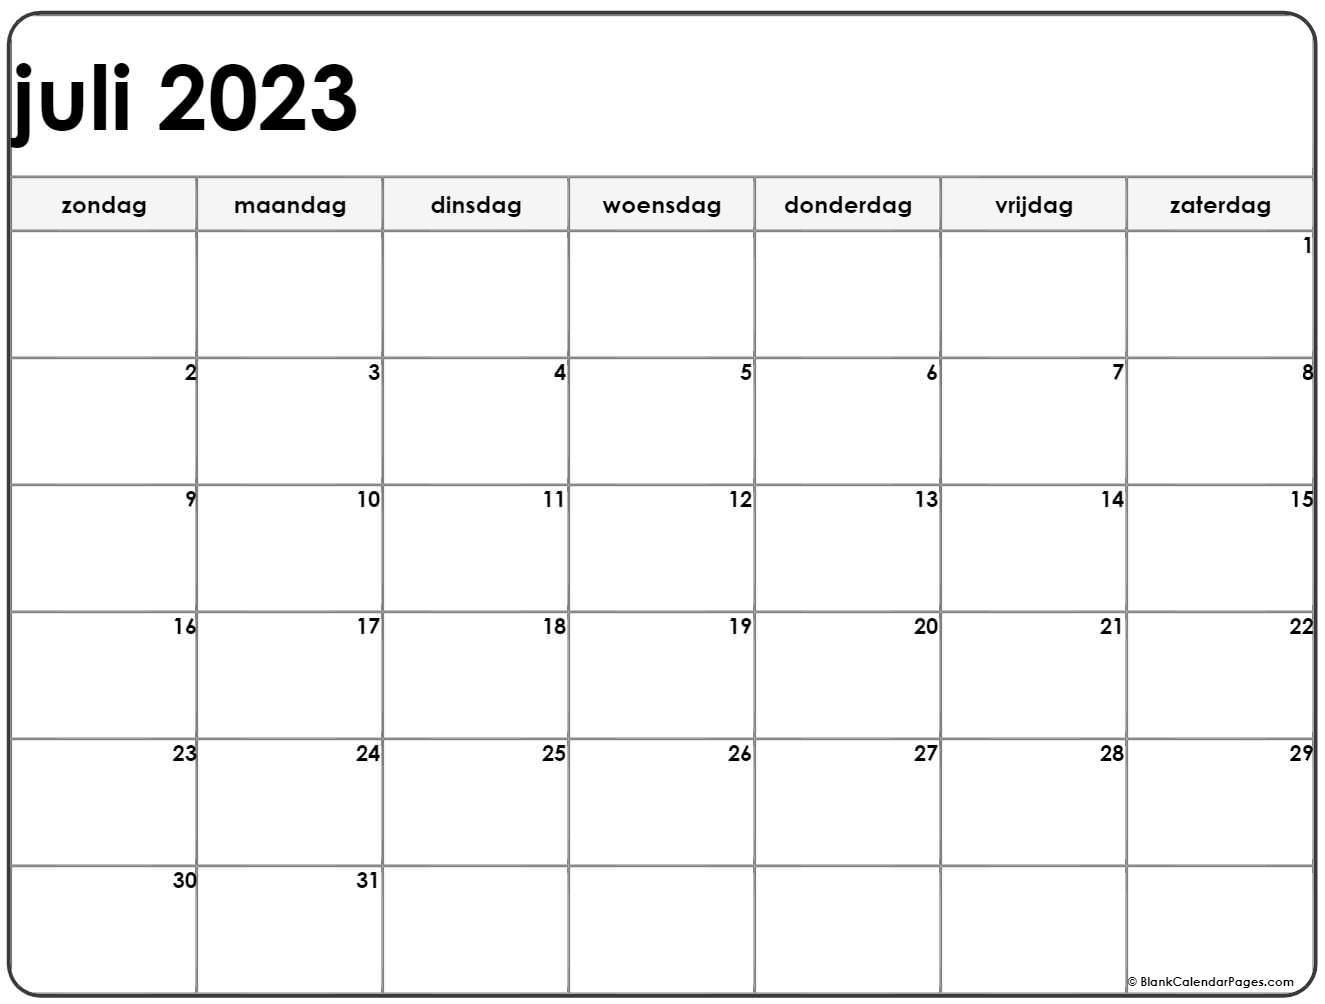 juli 2023 kalender | Kalender juli